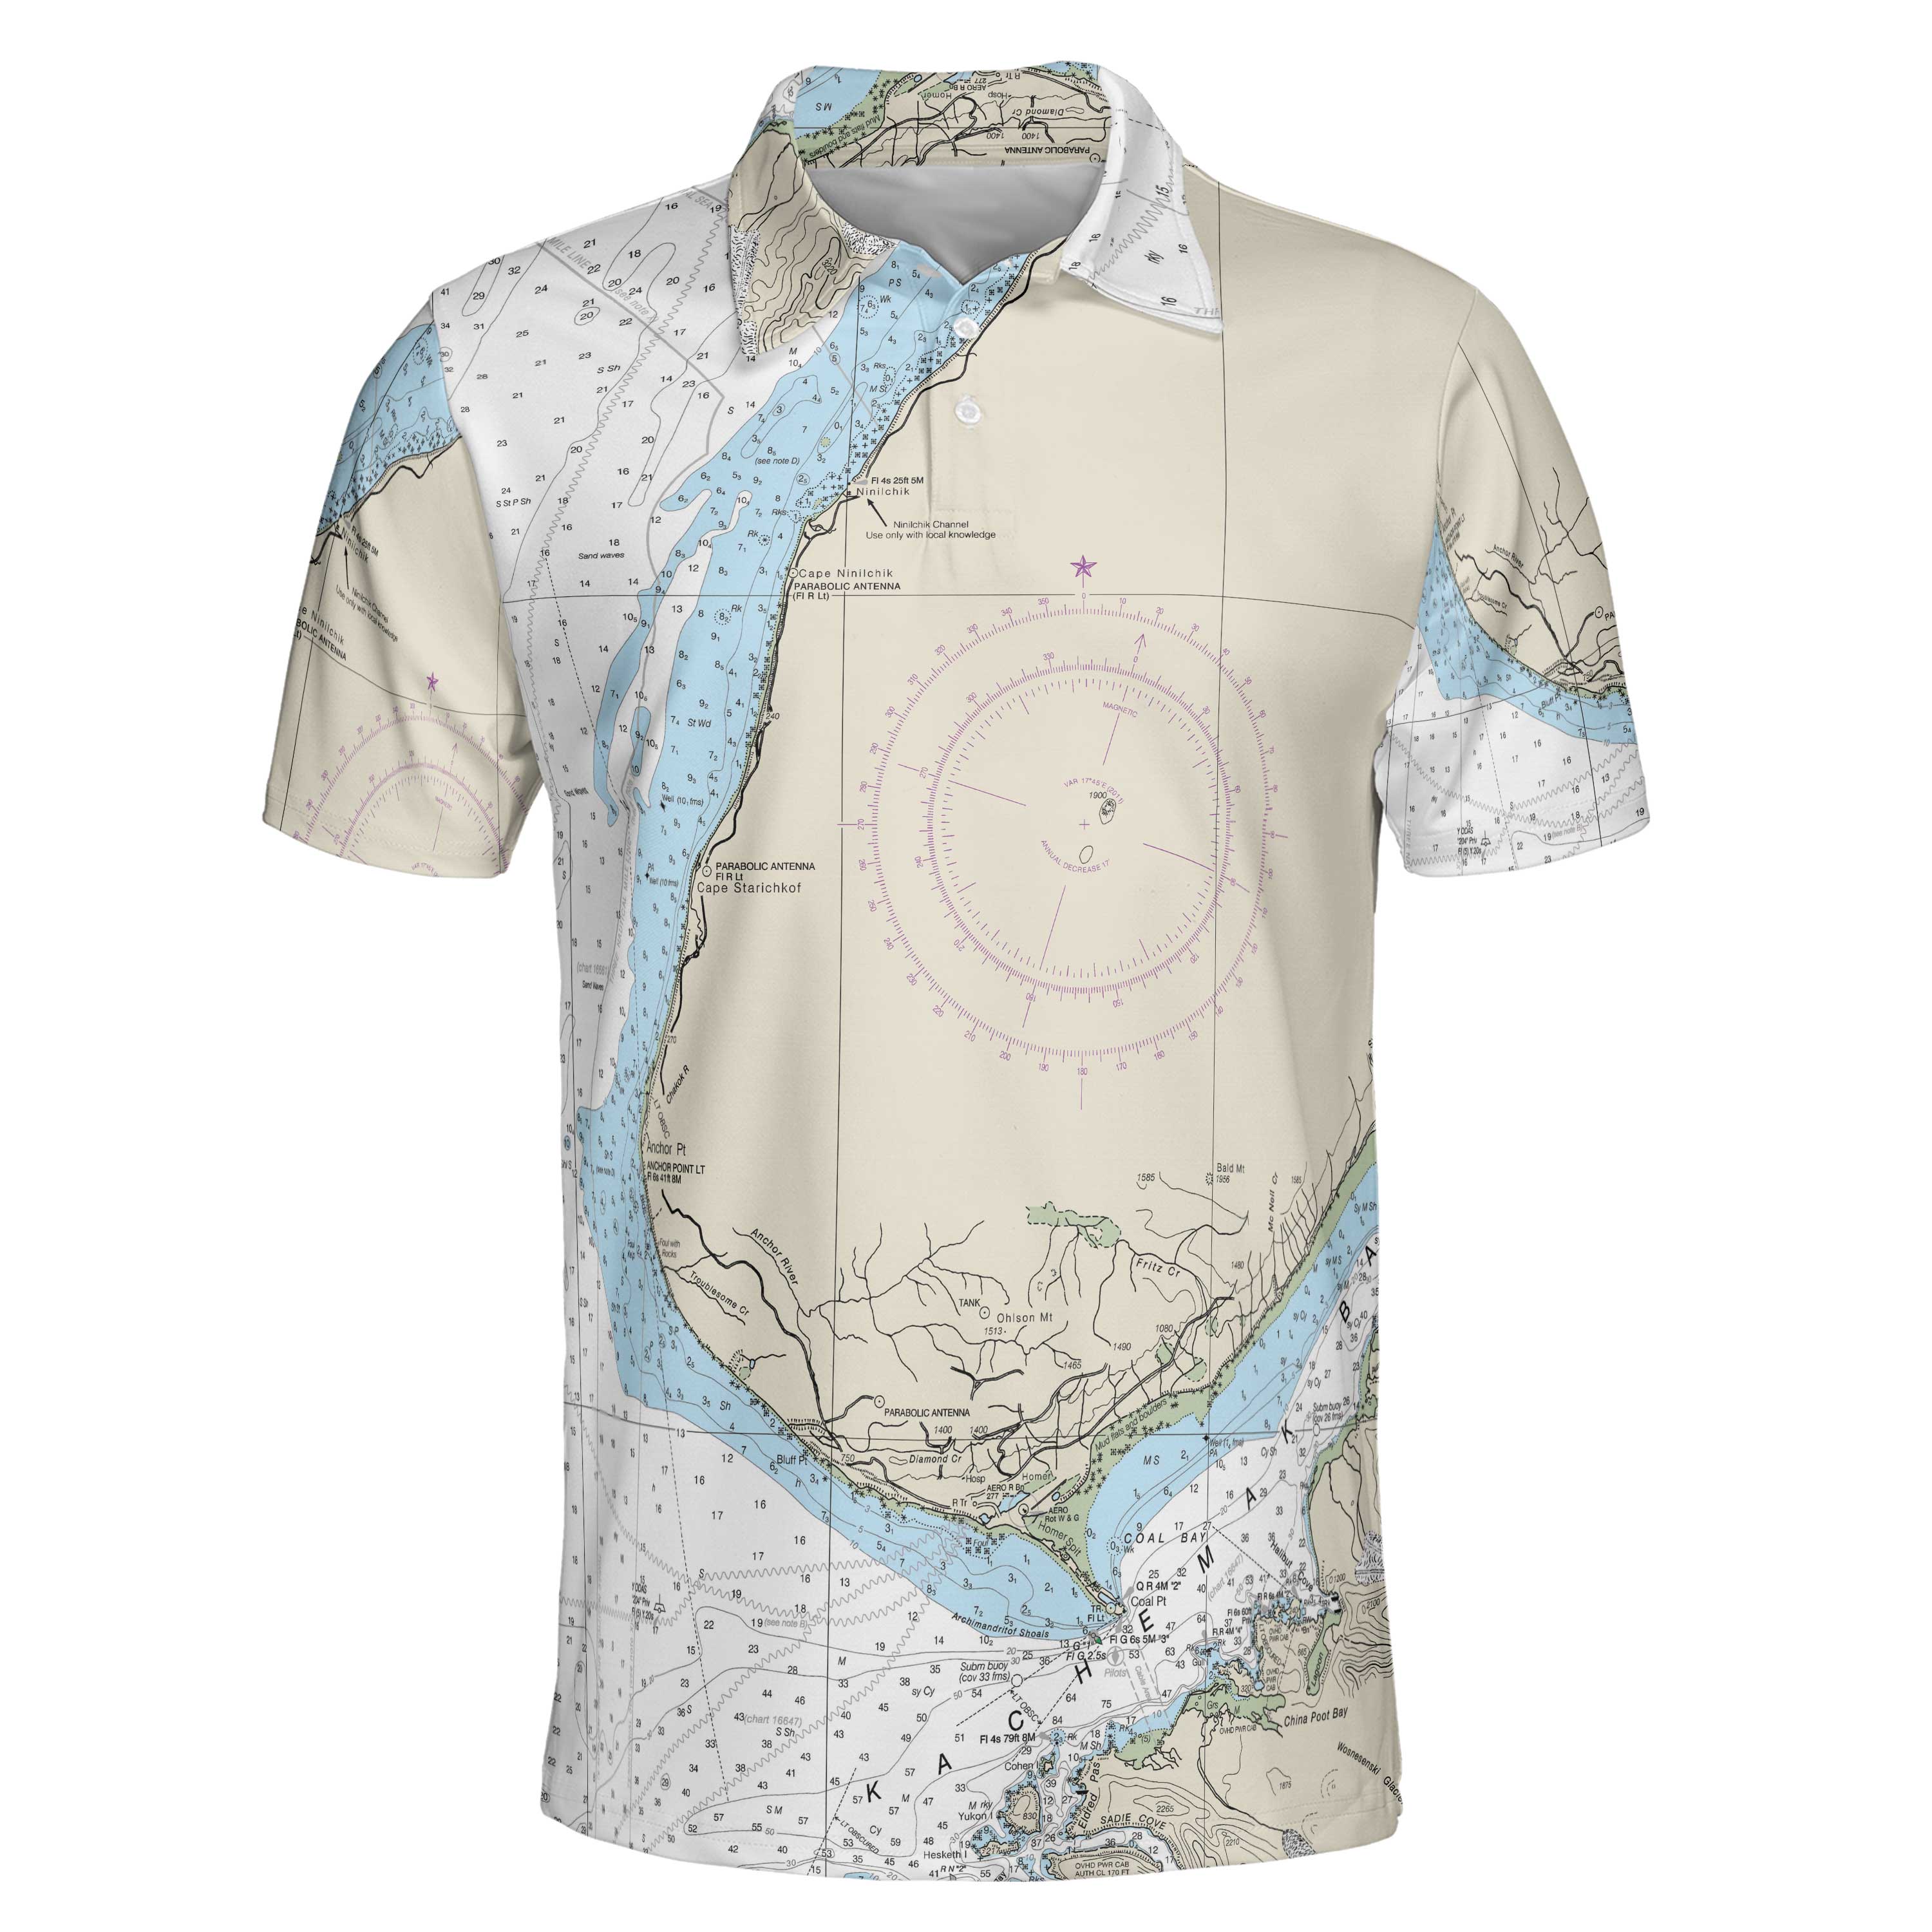 The Anchor Point Polo Shirt